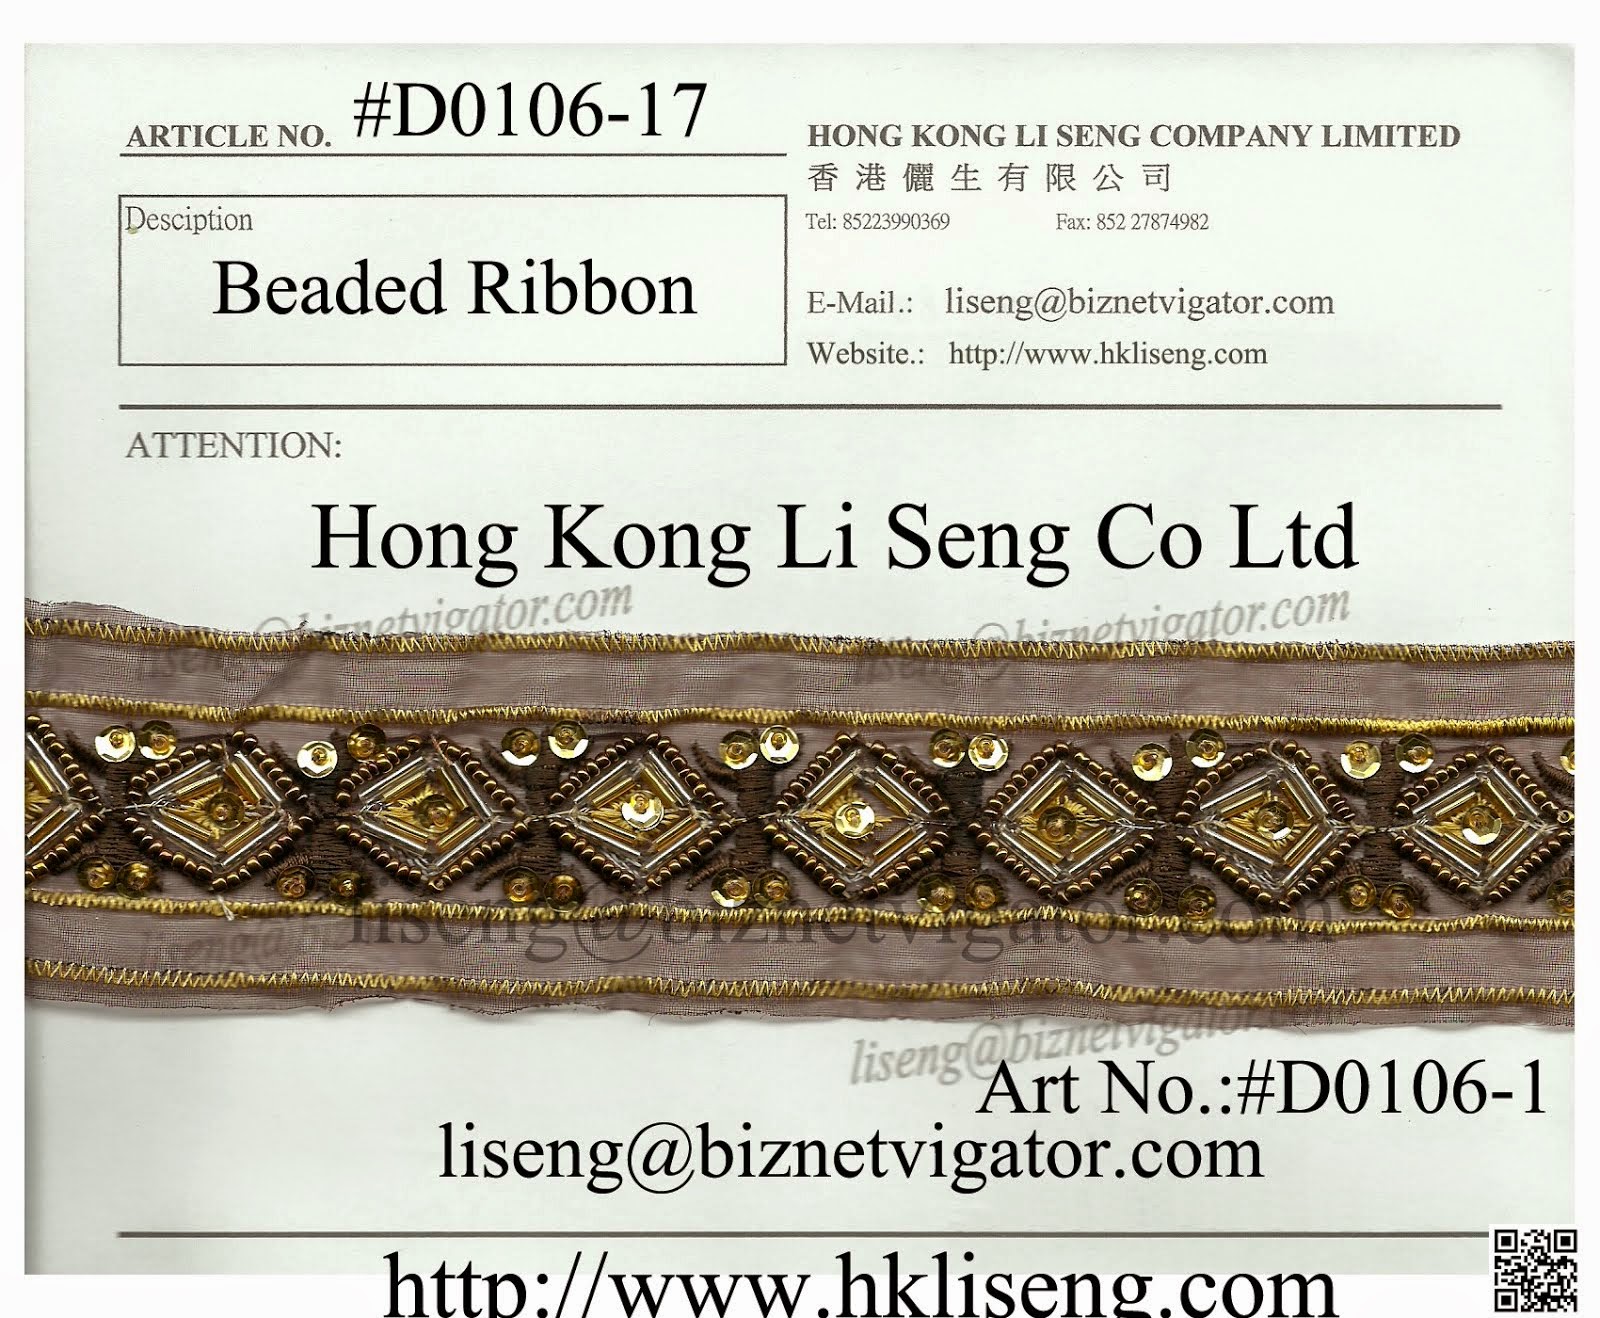 Beaded Ribbon Factory - Hong Kong Li Seng Co Ltd